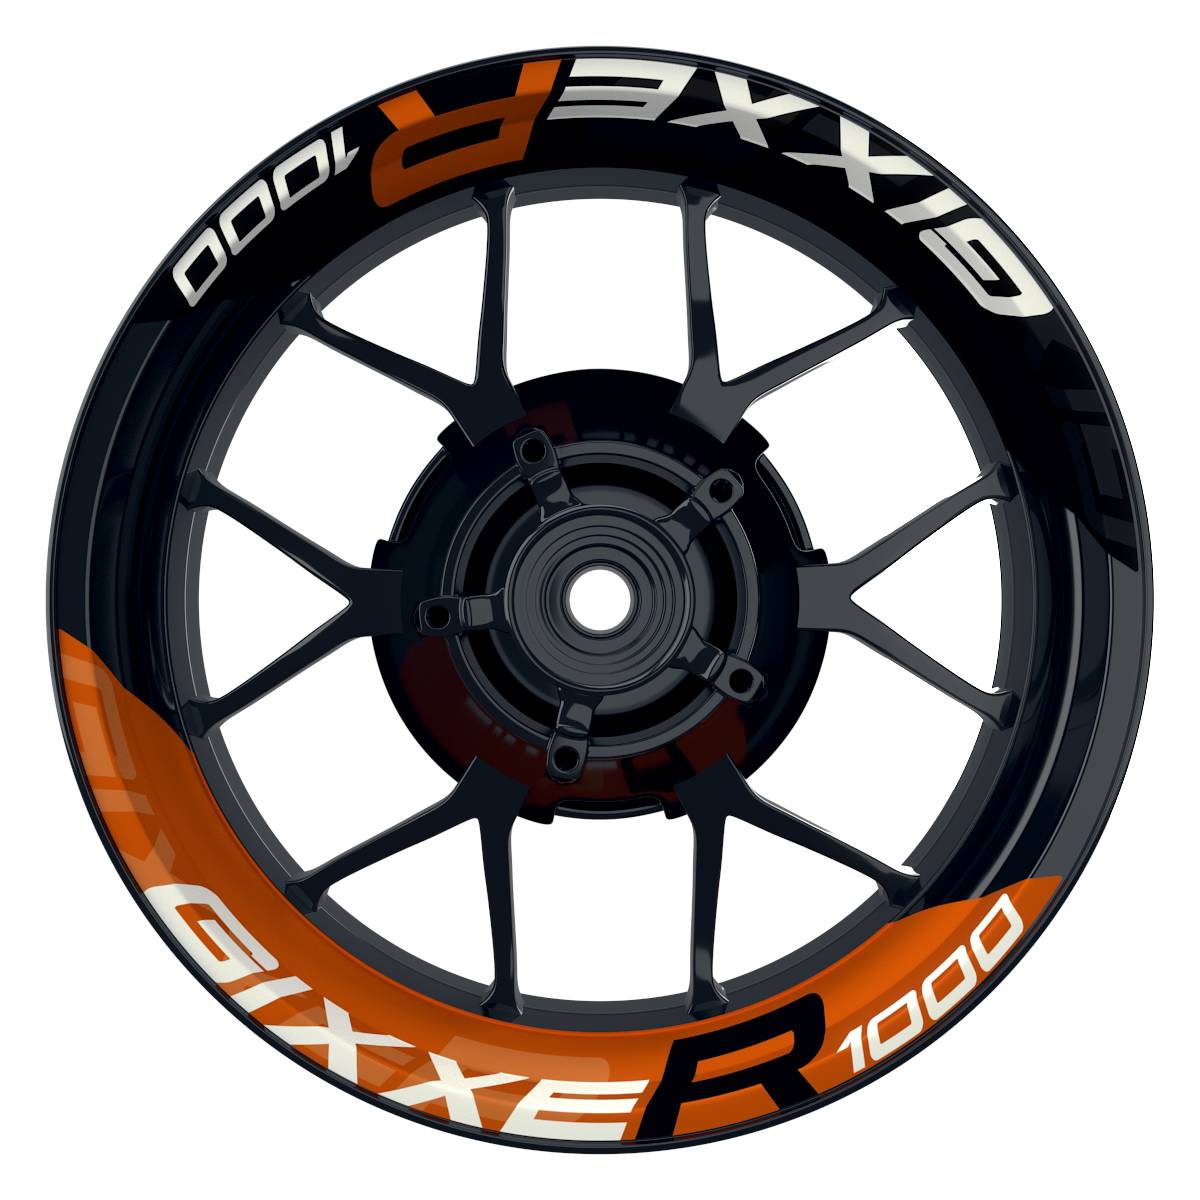 Wheelsticker Felgenaufkleber GIXXER1000 halb halb V2 schwarz orange Frontansicht